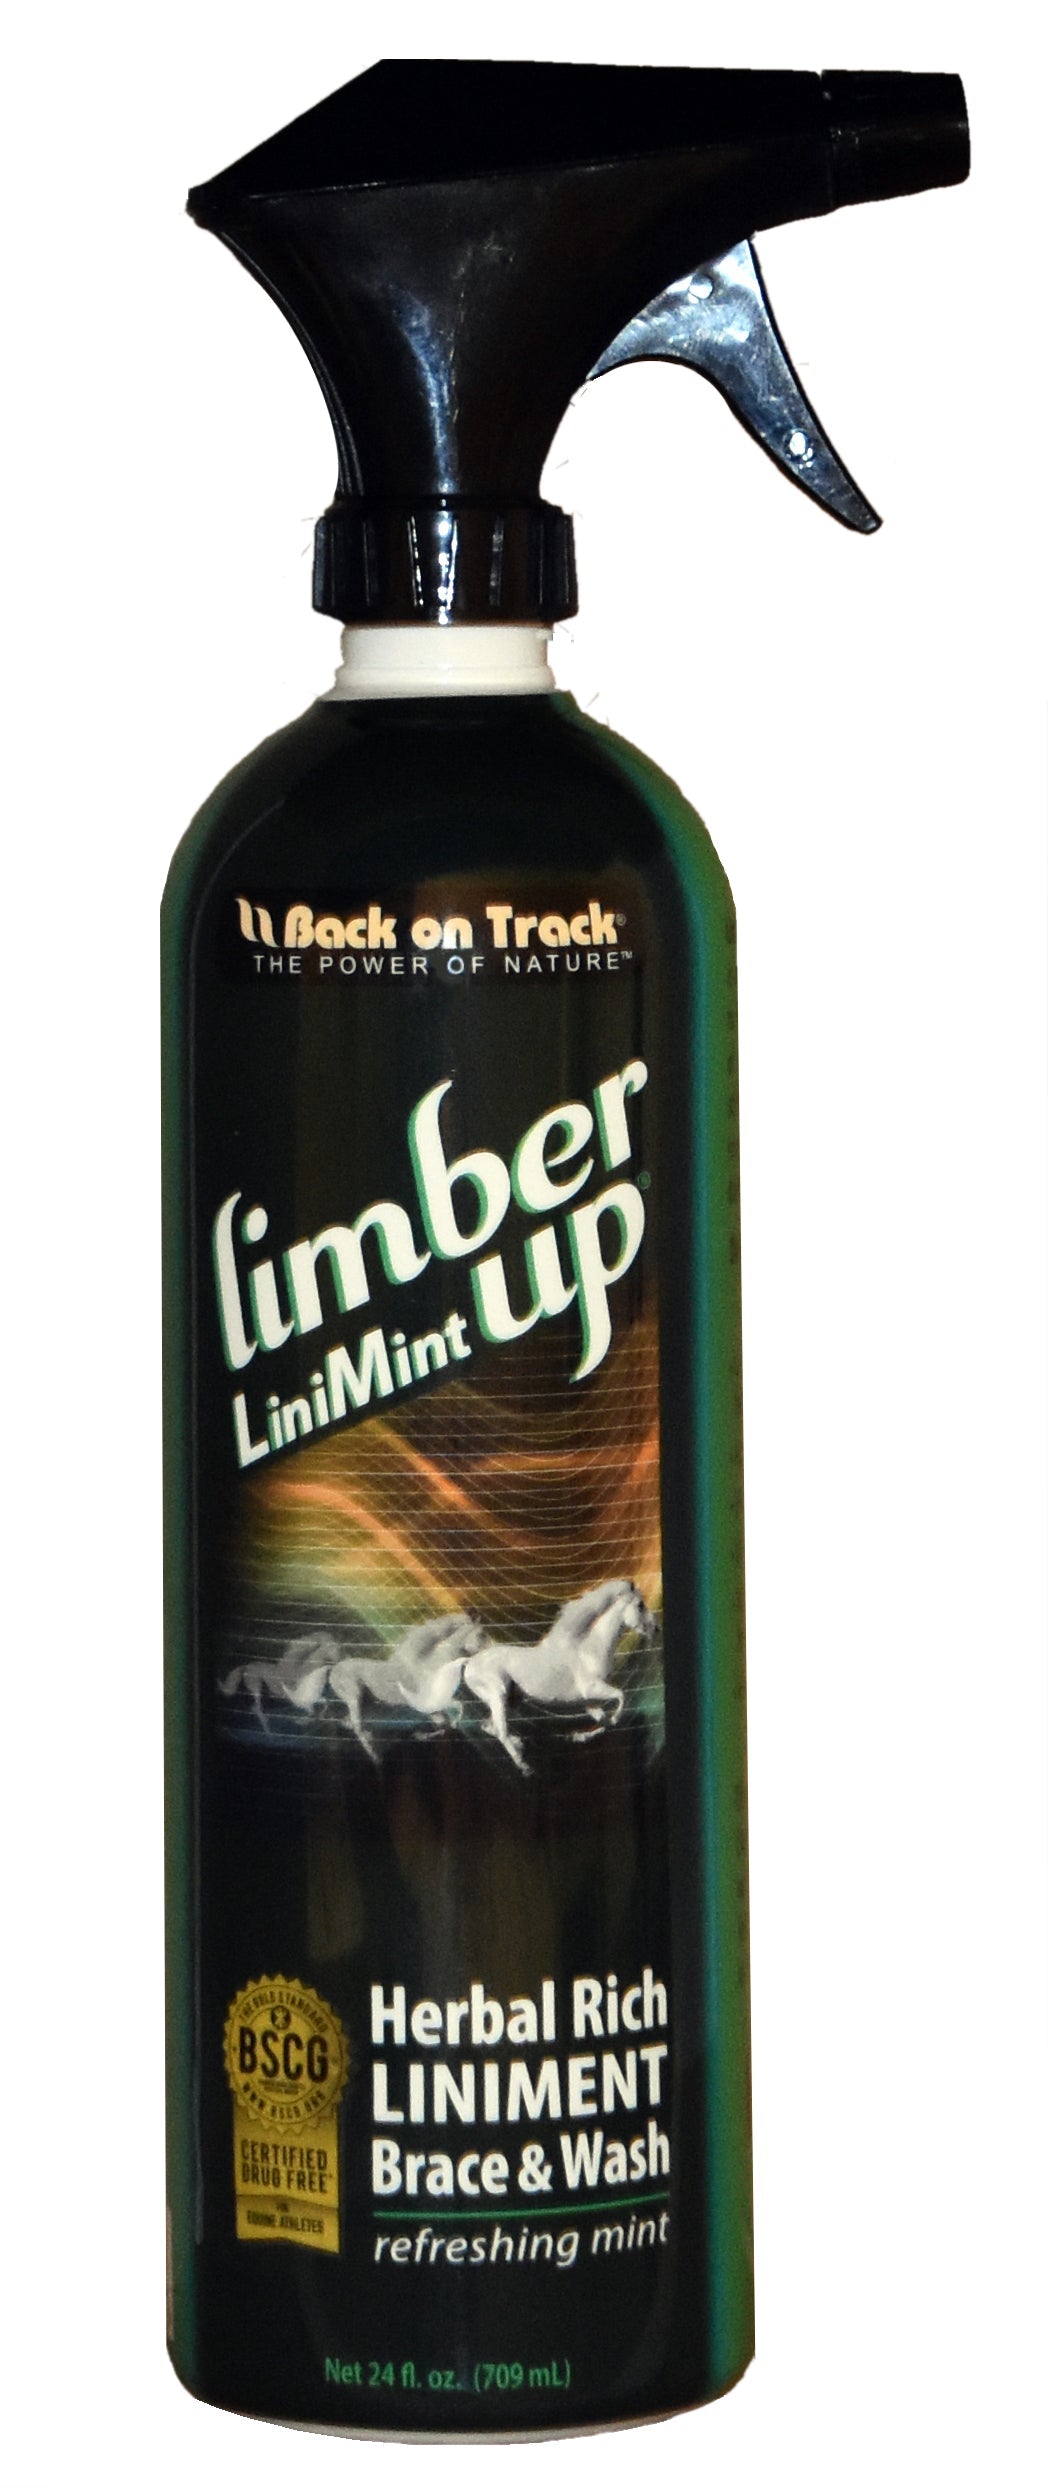 Back on Track Limber Up LiniMint